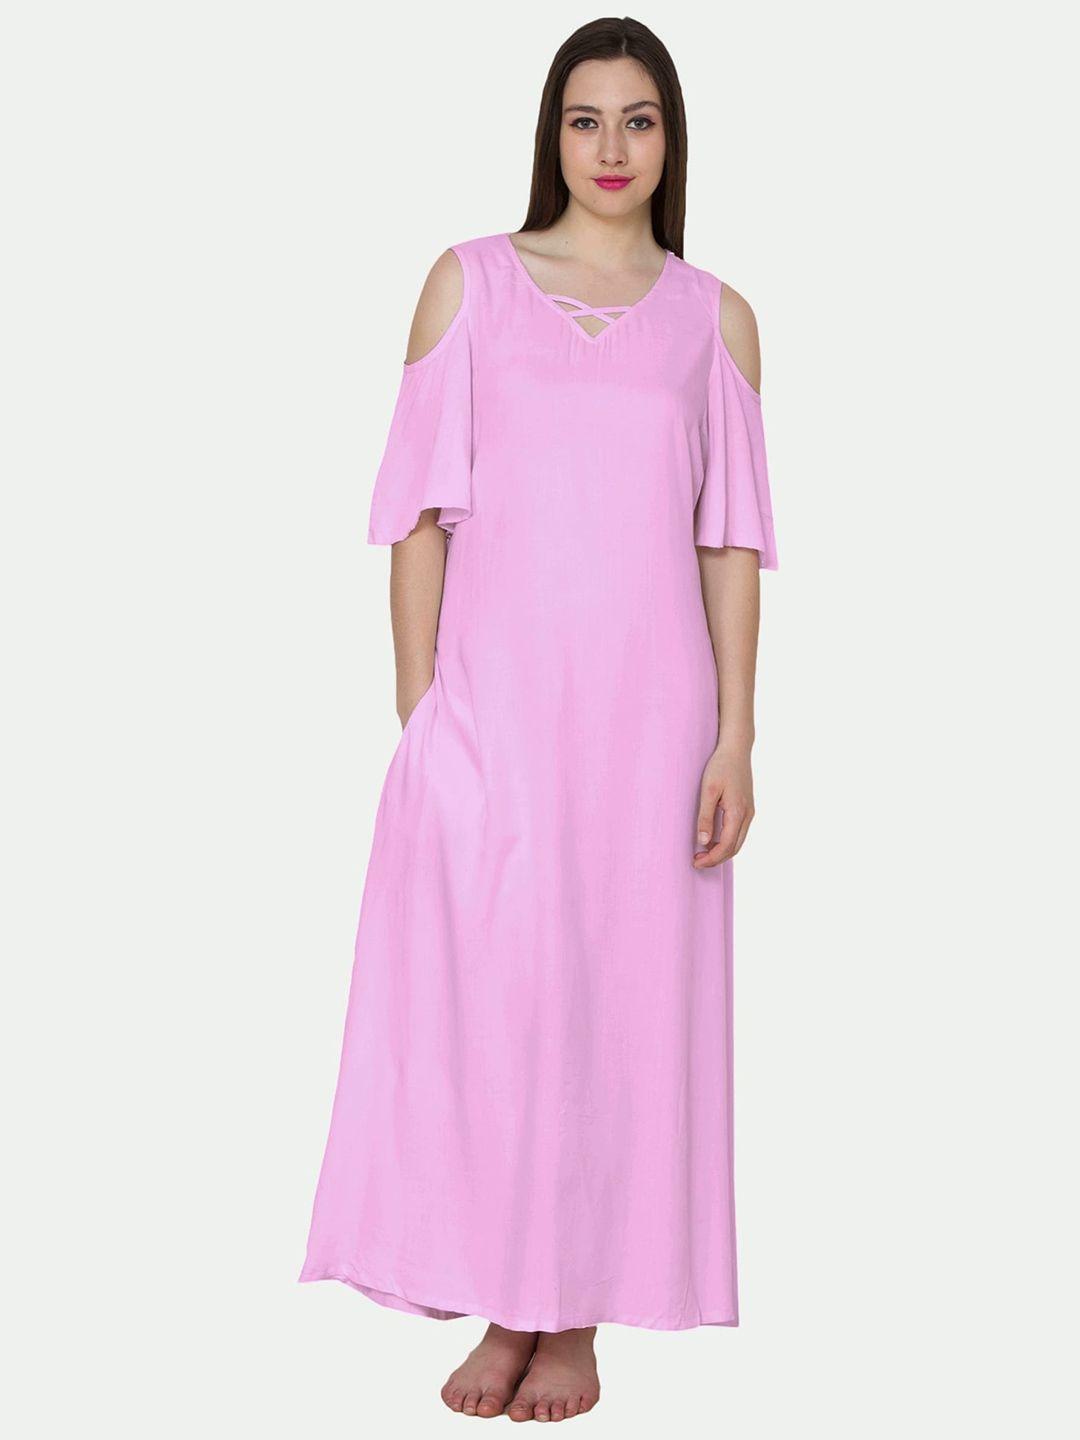 patrorna-women-solid-v-neck-cotton-blend-maxi-dress